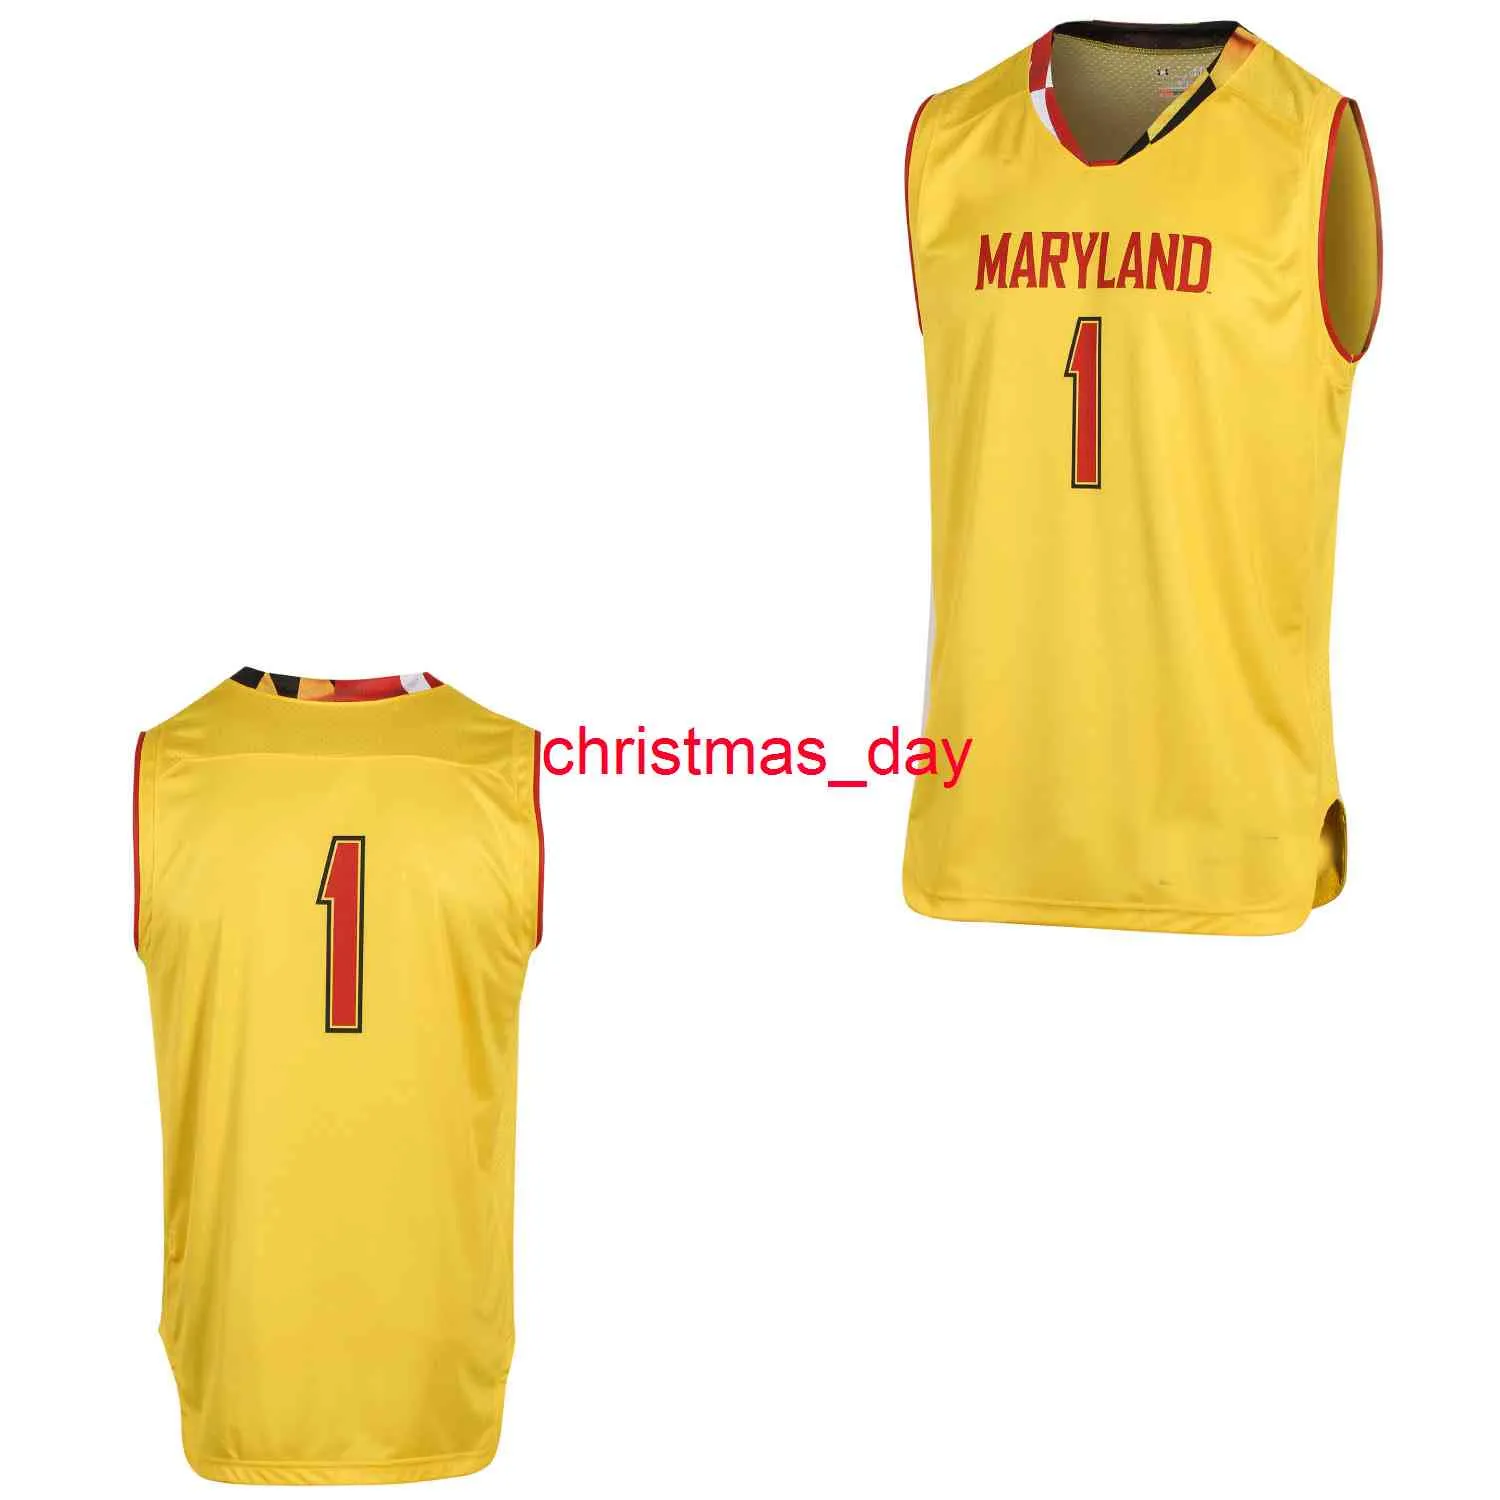 Cousu personnalisé Maryland Terrapins or # 1 maillot de basket-ball hommes femmes jeunes XS-6XL